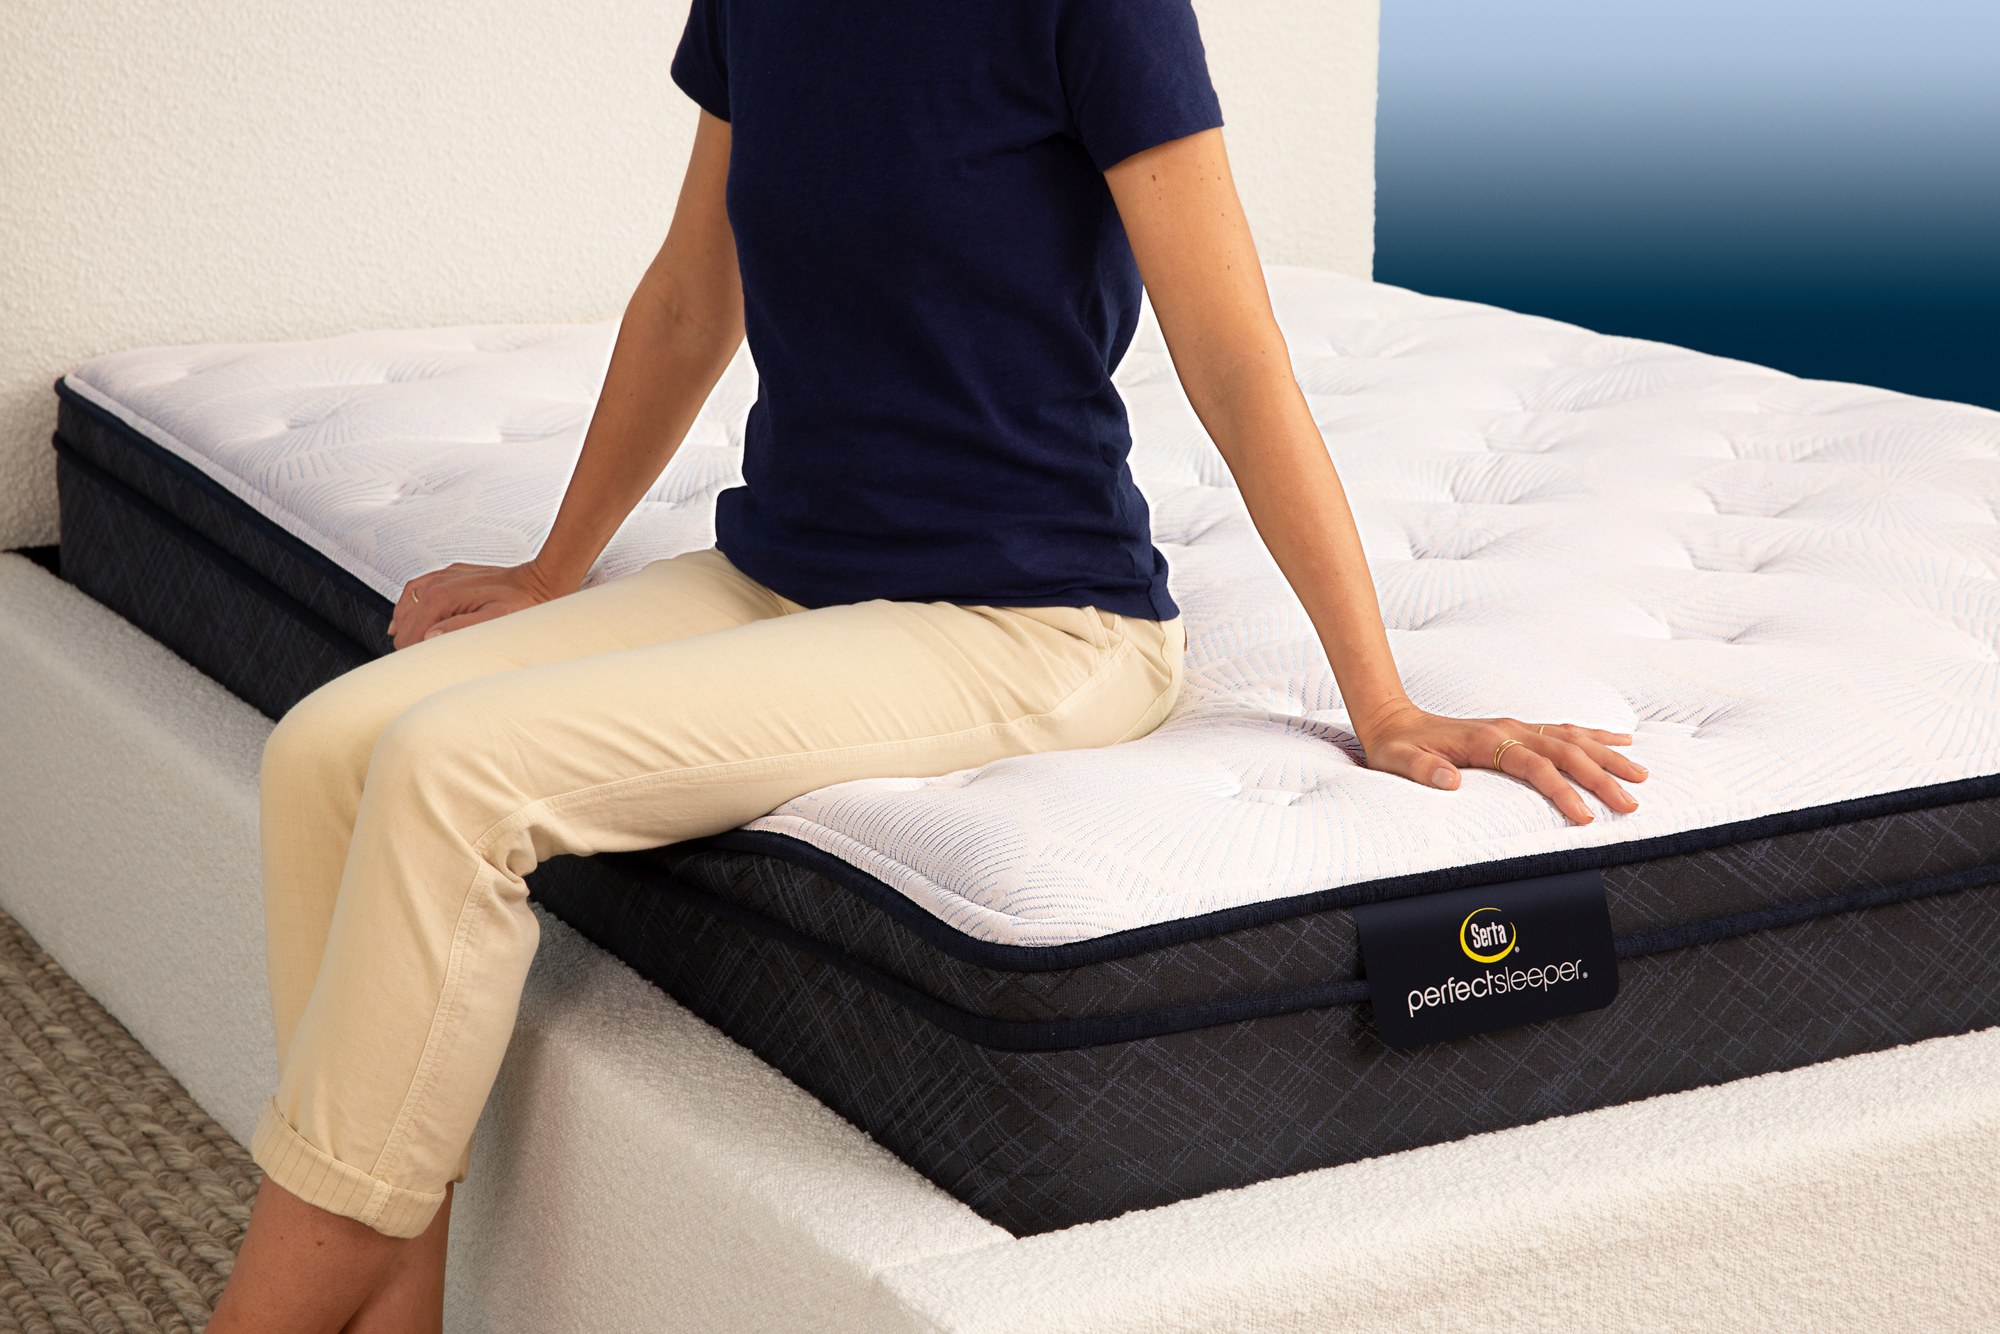 Photo of the Serta Perfect Sleeper Adoring Night Plush Eurotop mattress.